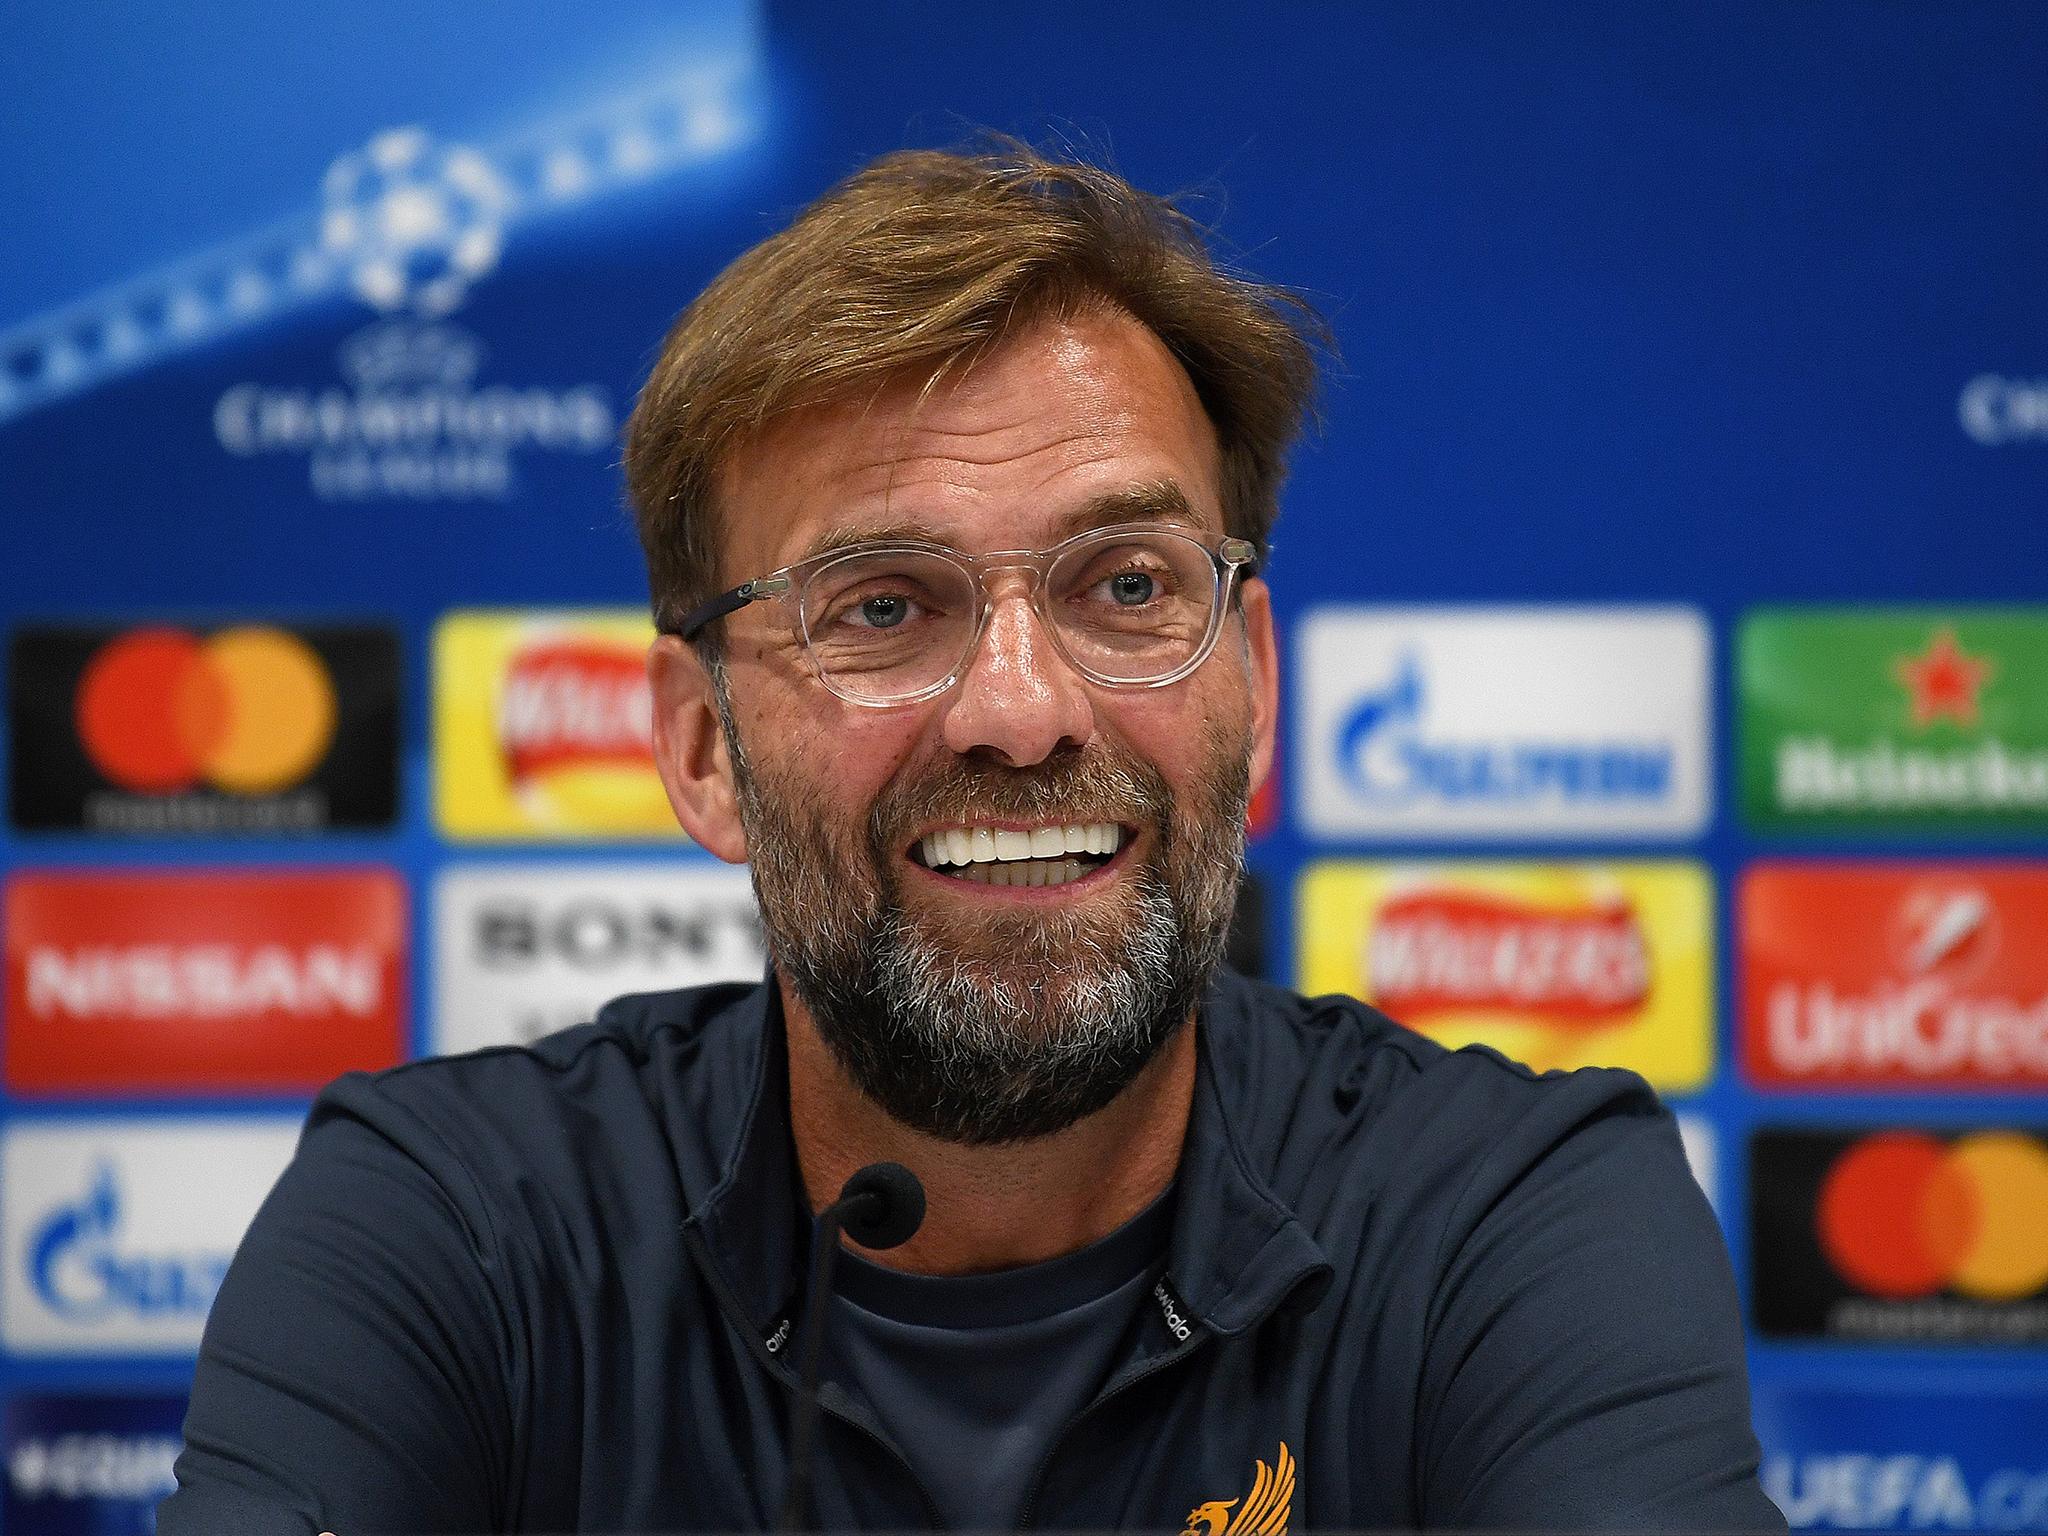 Jürgen Klopp press conference LIVE: Champions League final latest as Liverpool manager faces media